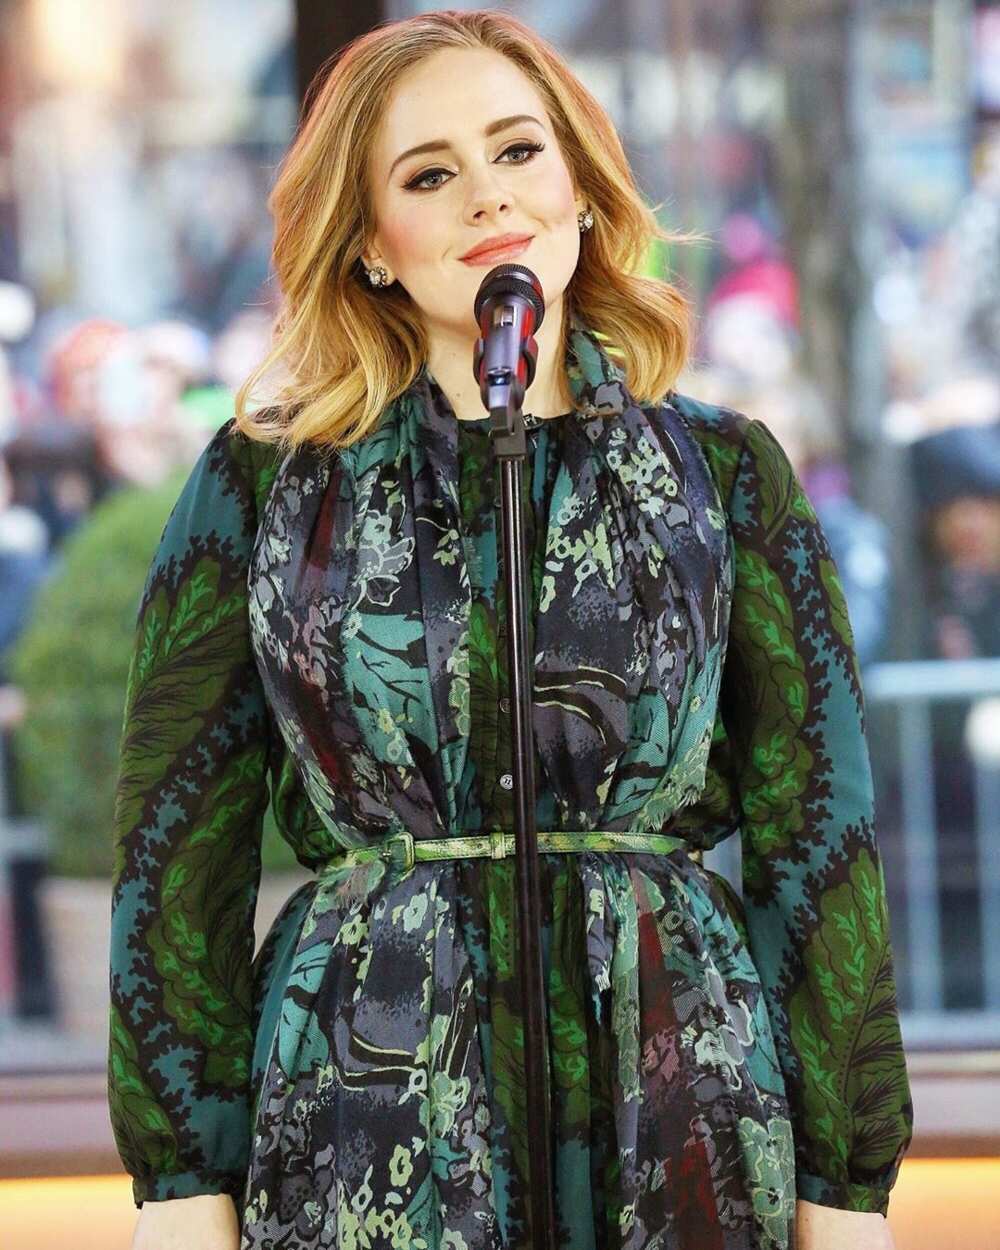 Adele trends on social media over assumed album release